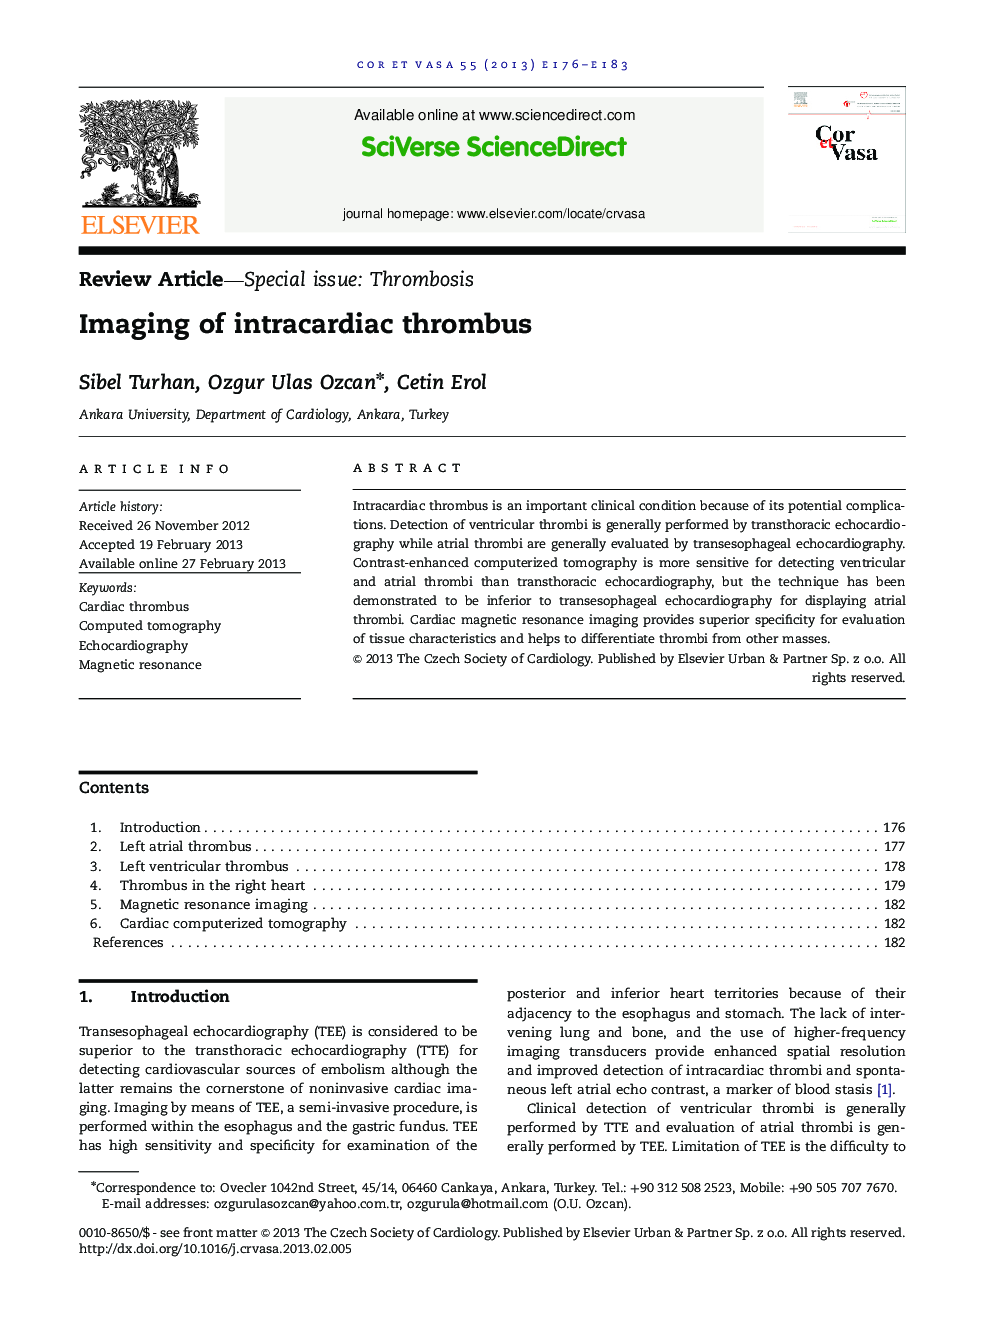 Imaging of intracardiac thrombus